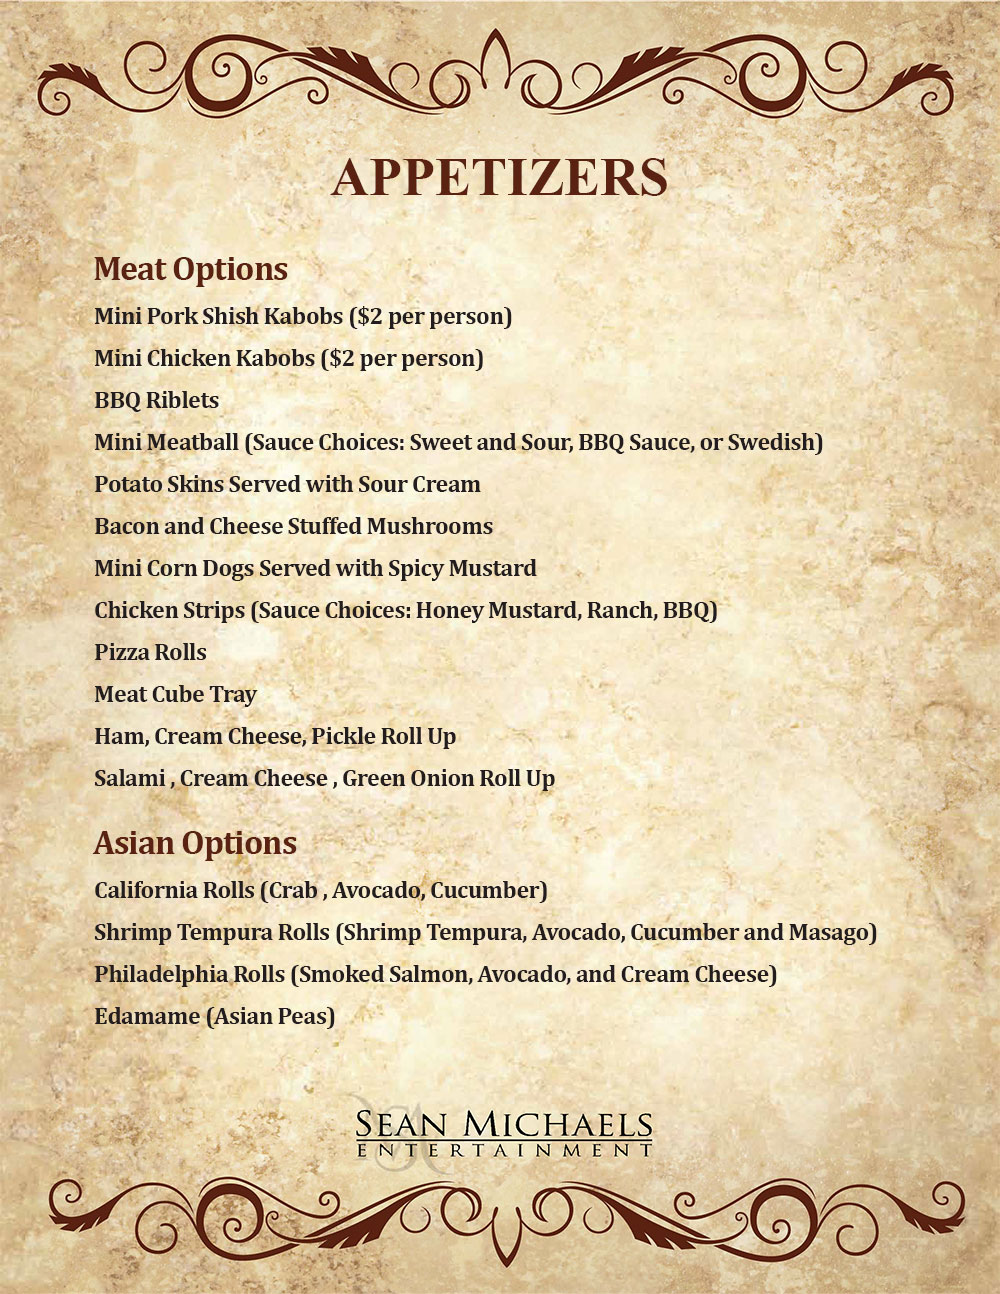 Sean-Michaels-Entertainment-appetizer-2-menu